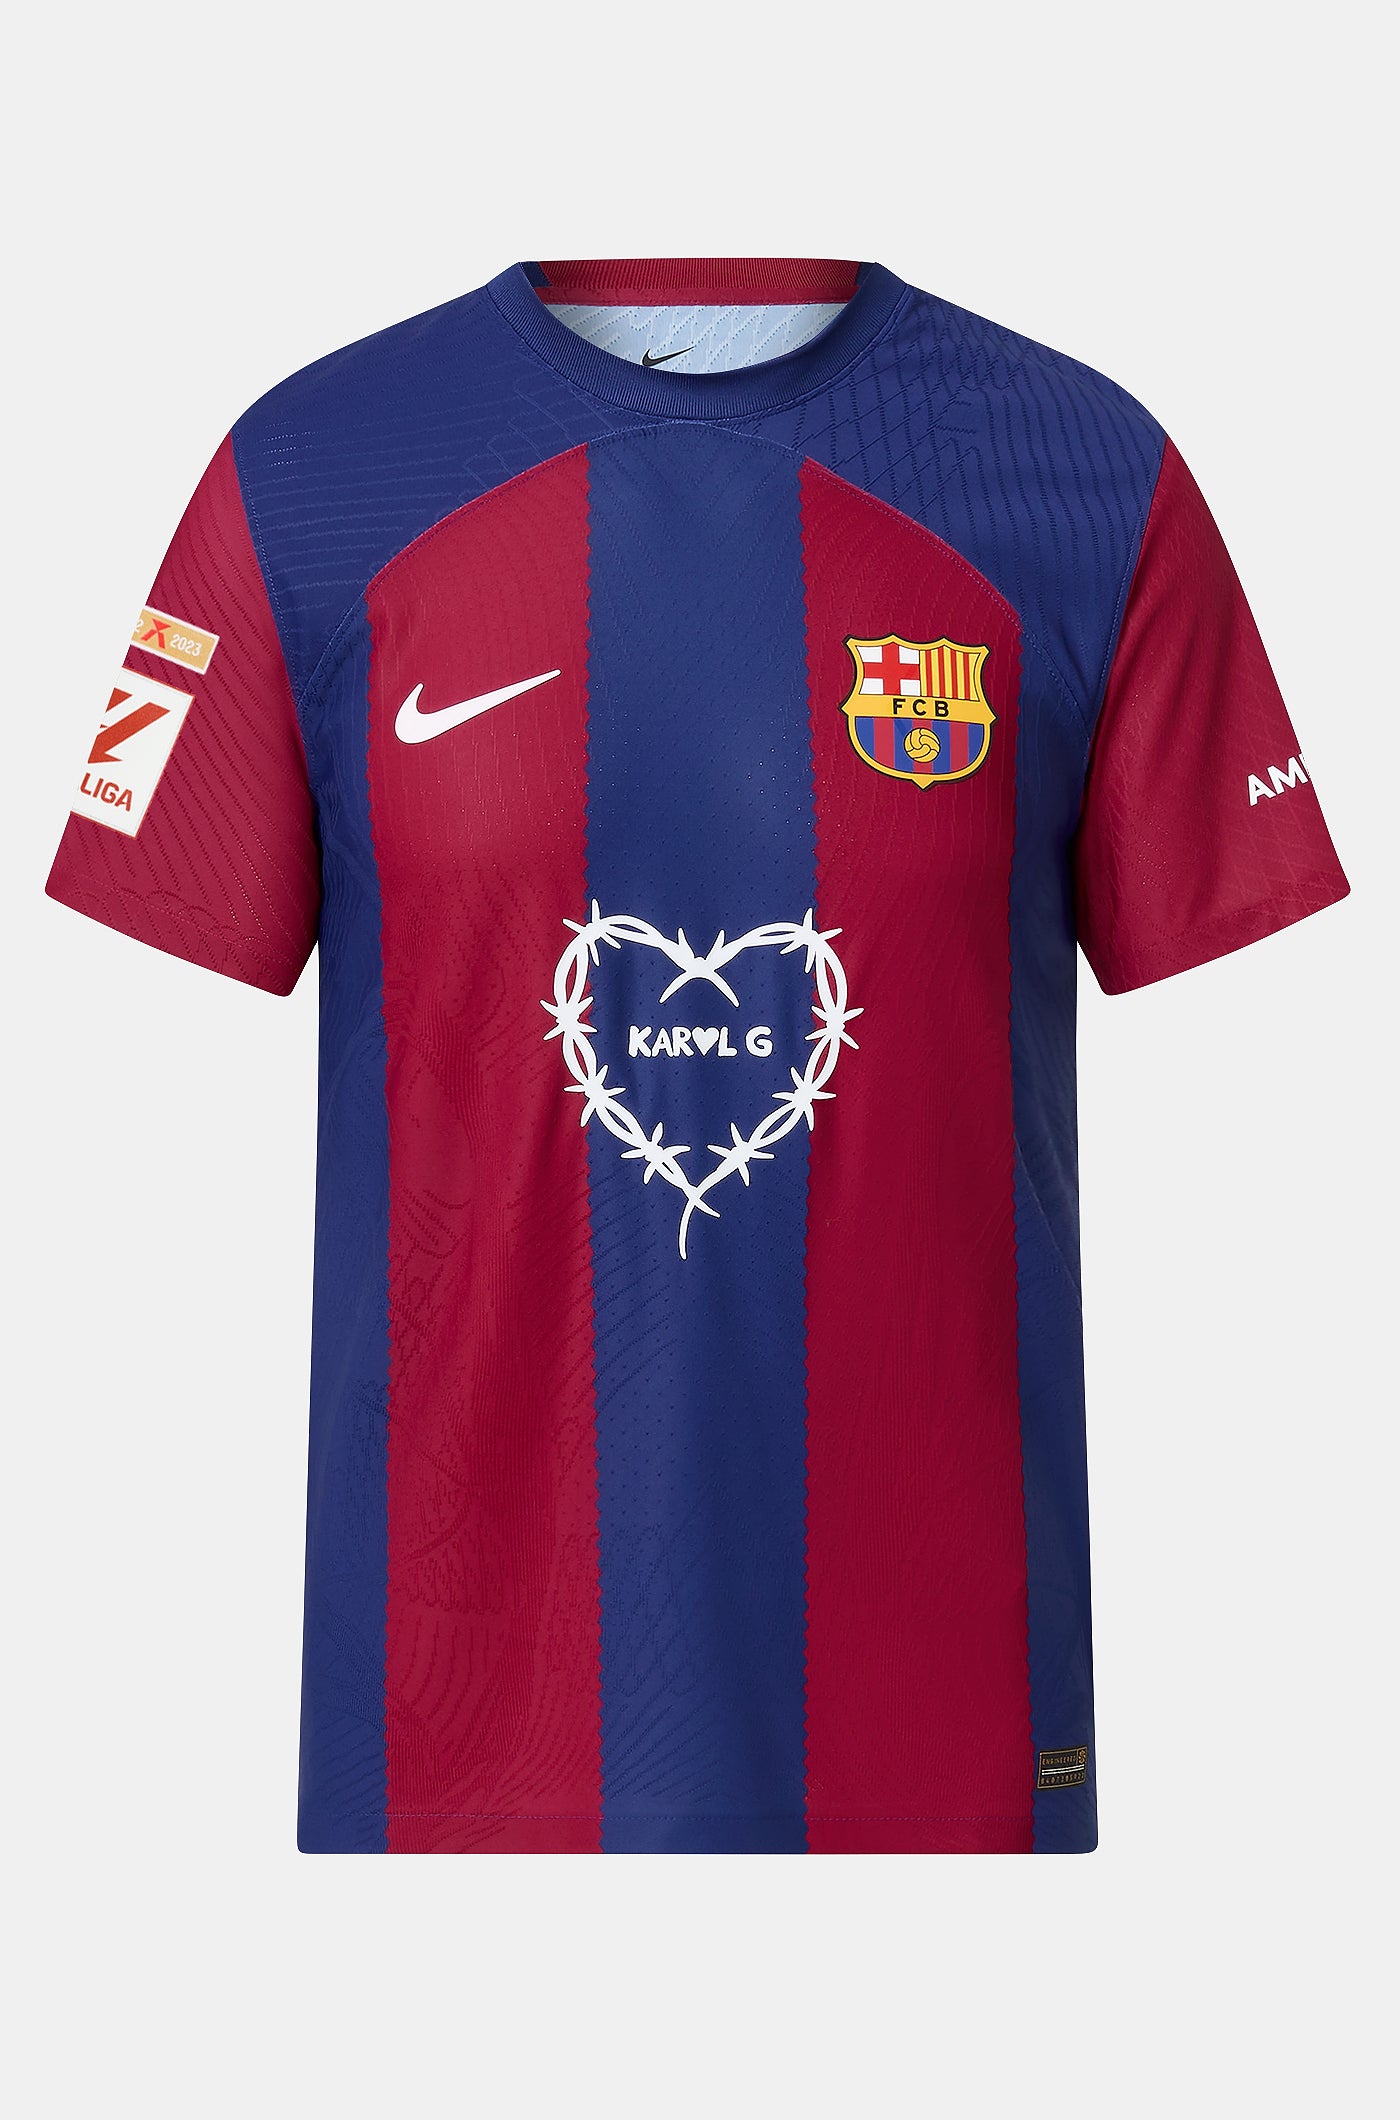 Limited Edition Karol G x FC Barcelona men's home shirt 23/24 Player's Edition